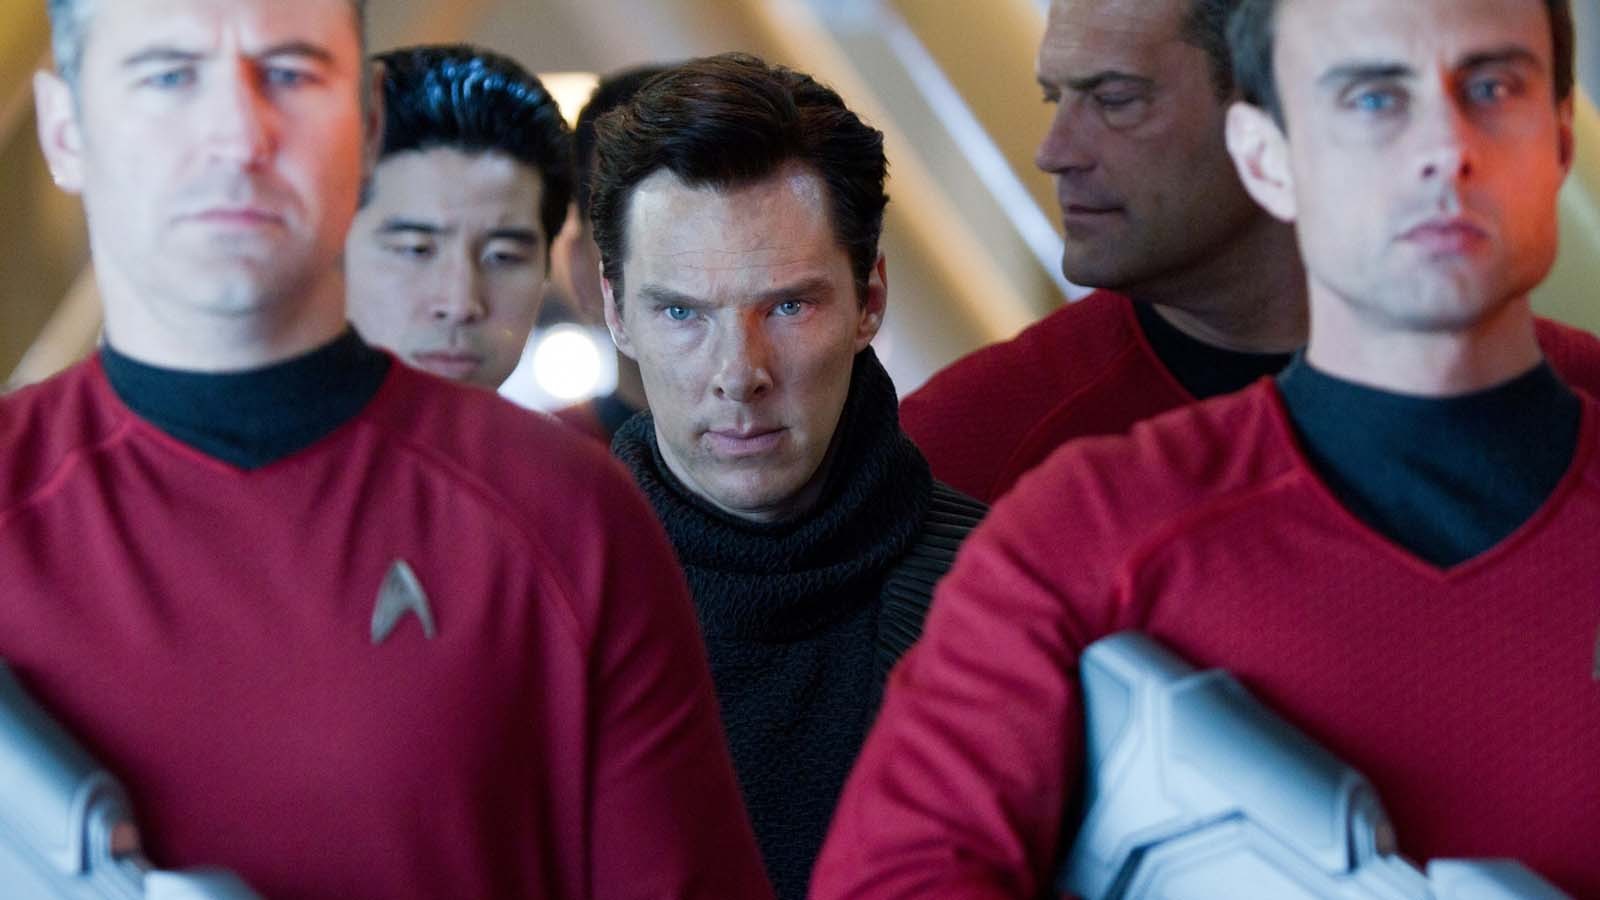 People 1600x900 Khan Benedict Cumberbatch Star Trek Into Darkness film stills Star Trek villains movies movie characters men